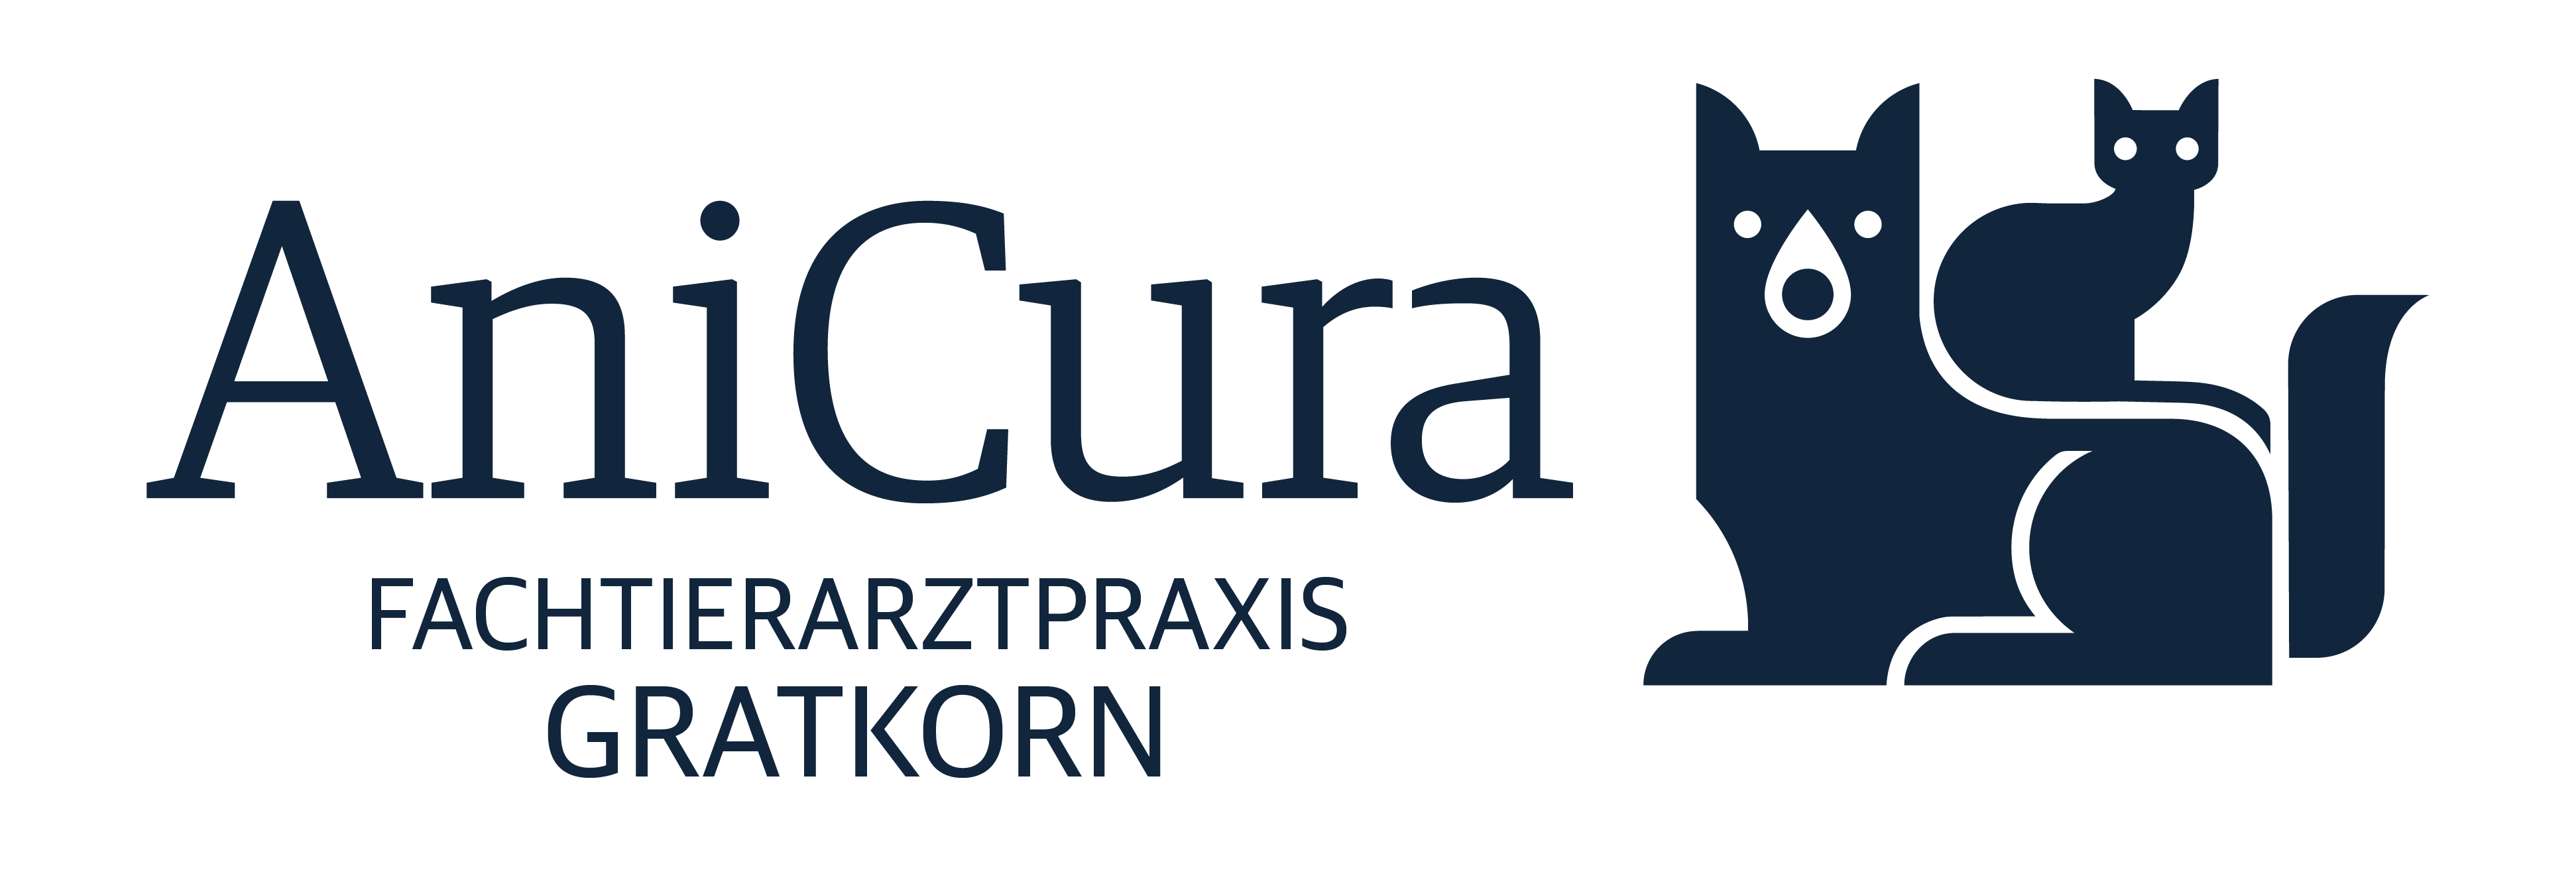 Fachtierarztpraxis Gratkorn (Graz) logo